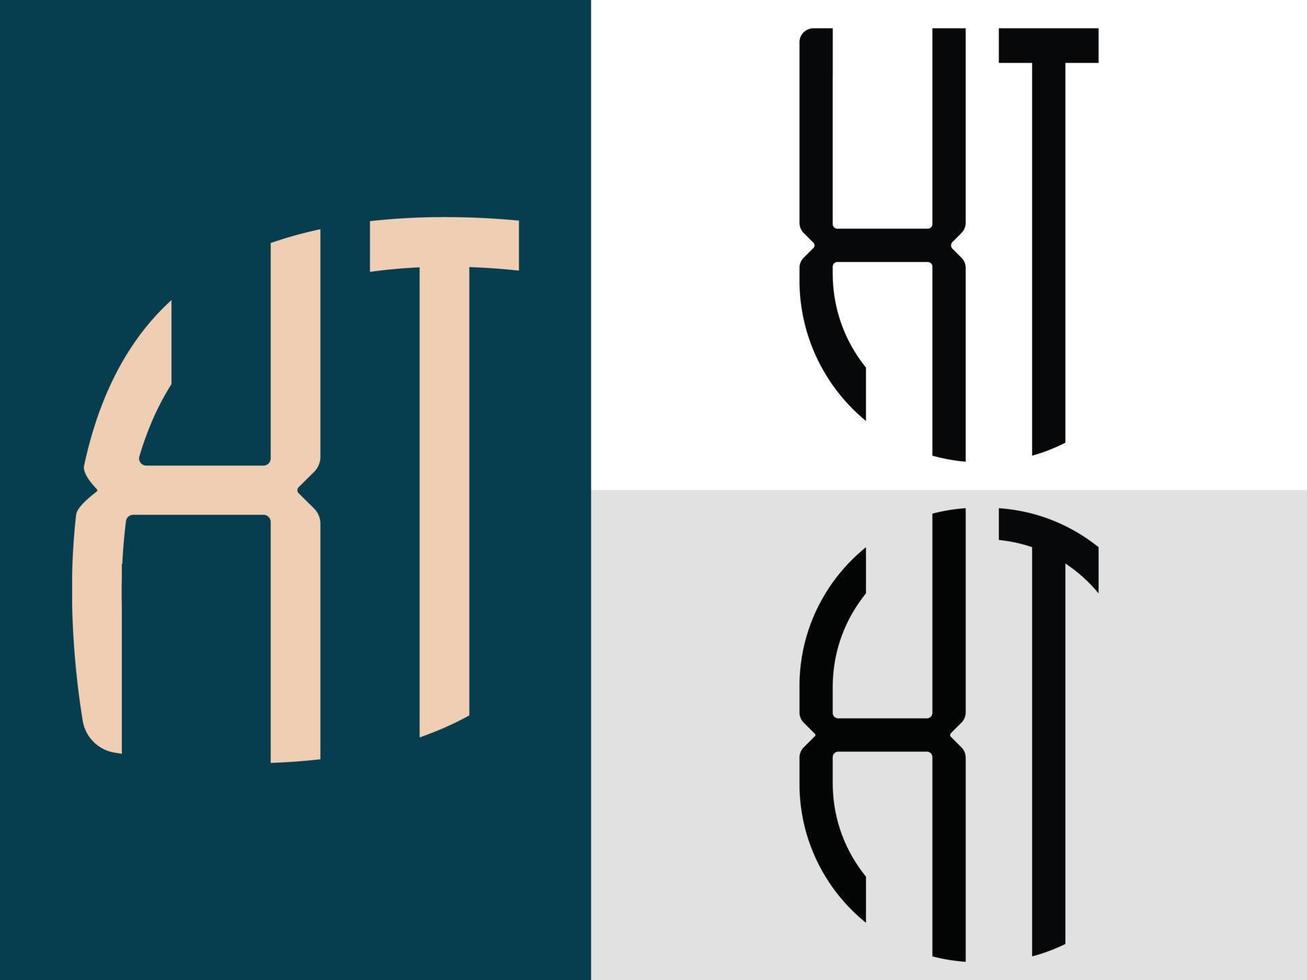 kreative anfangsbuchstaben xt logo designs paket. vektor